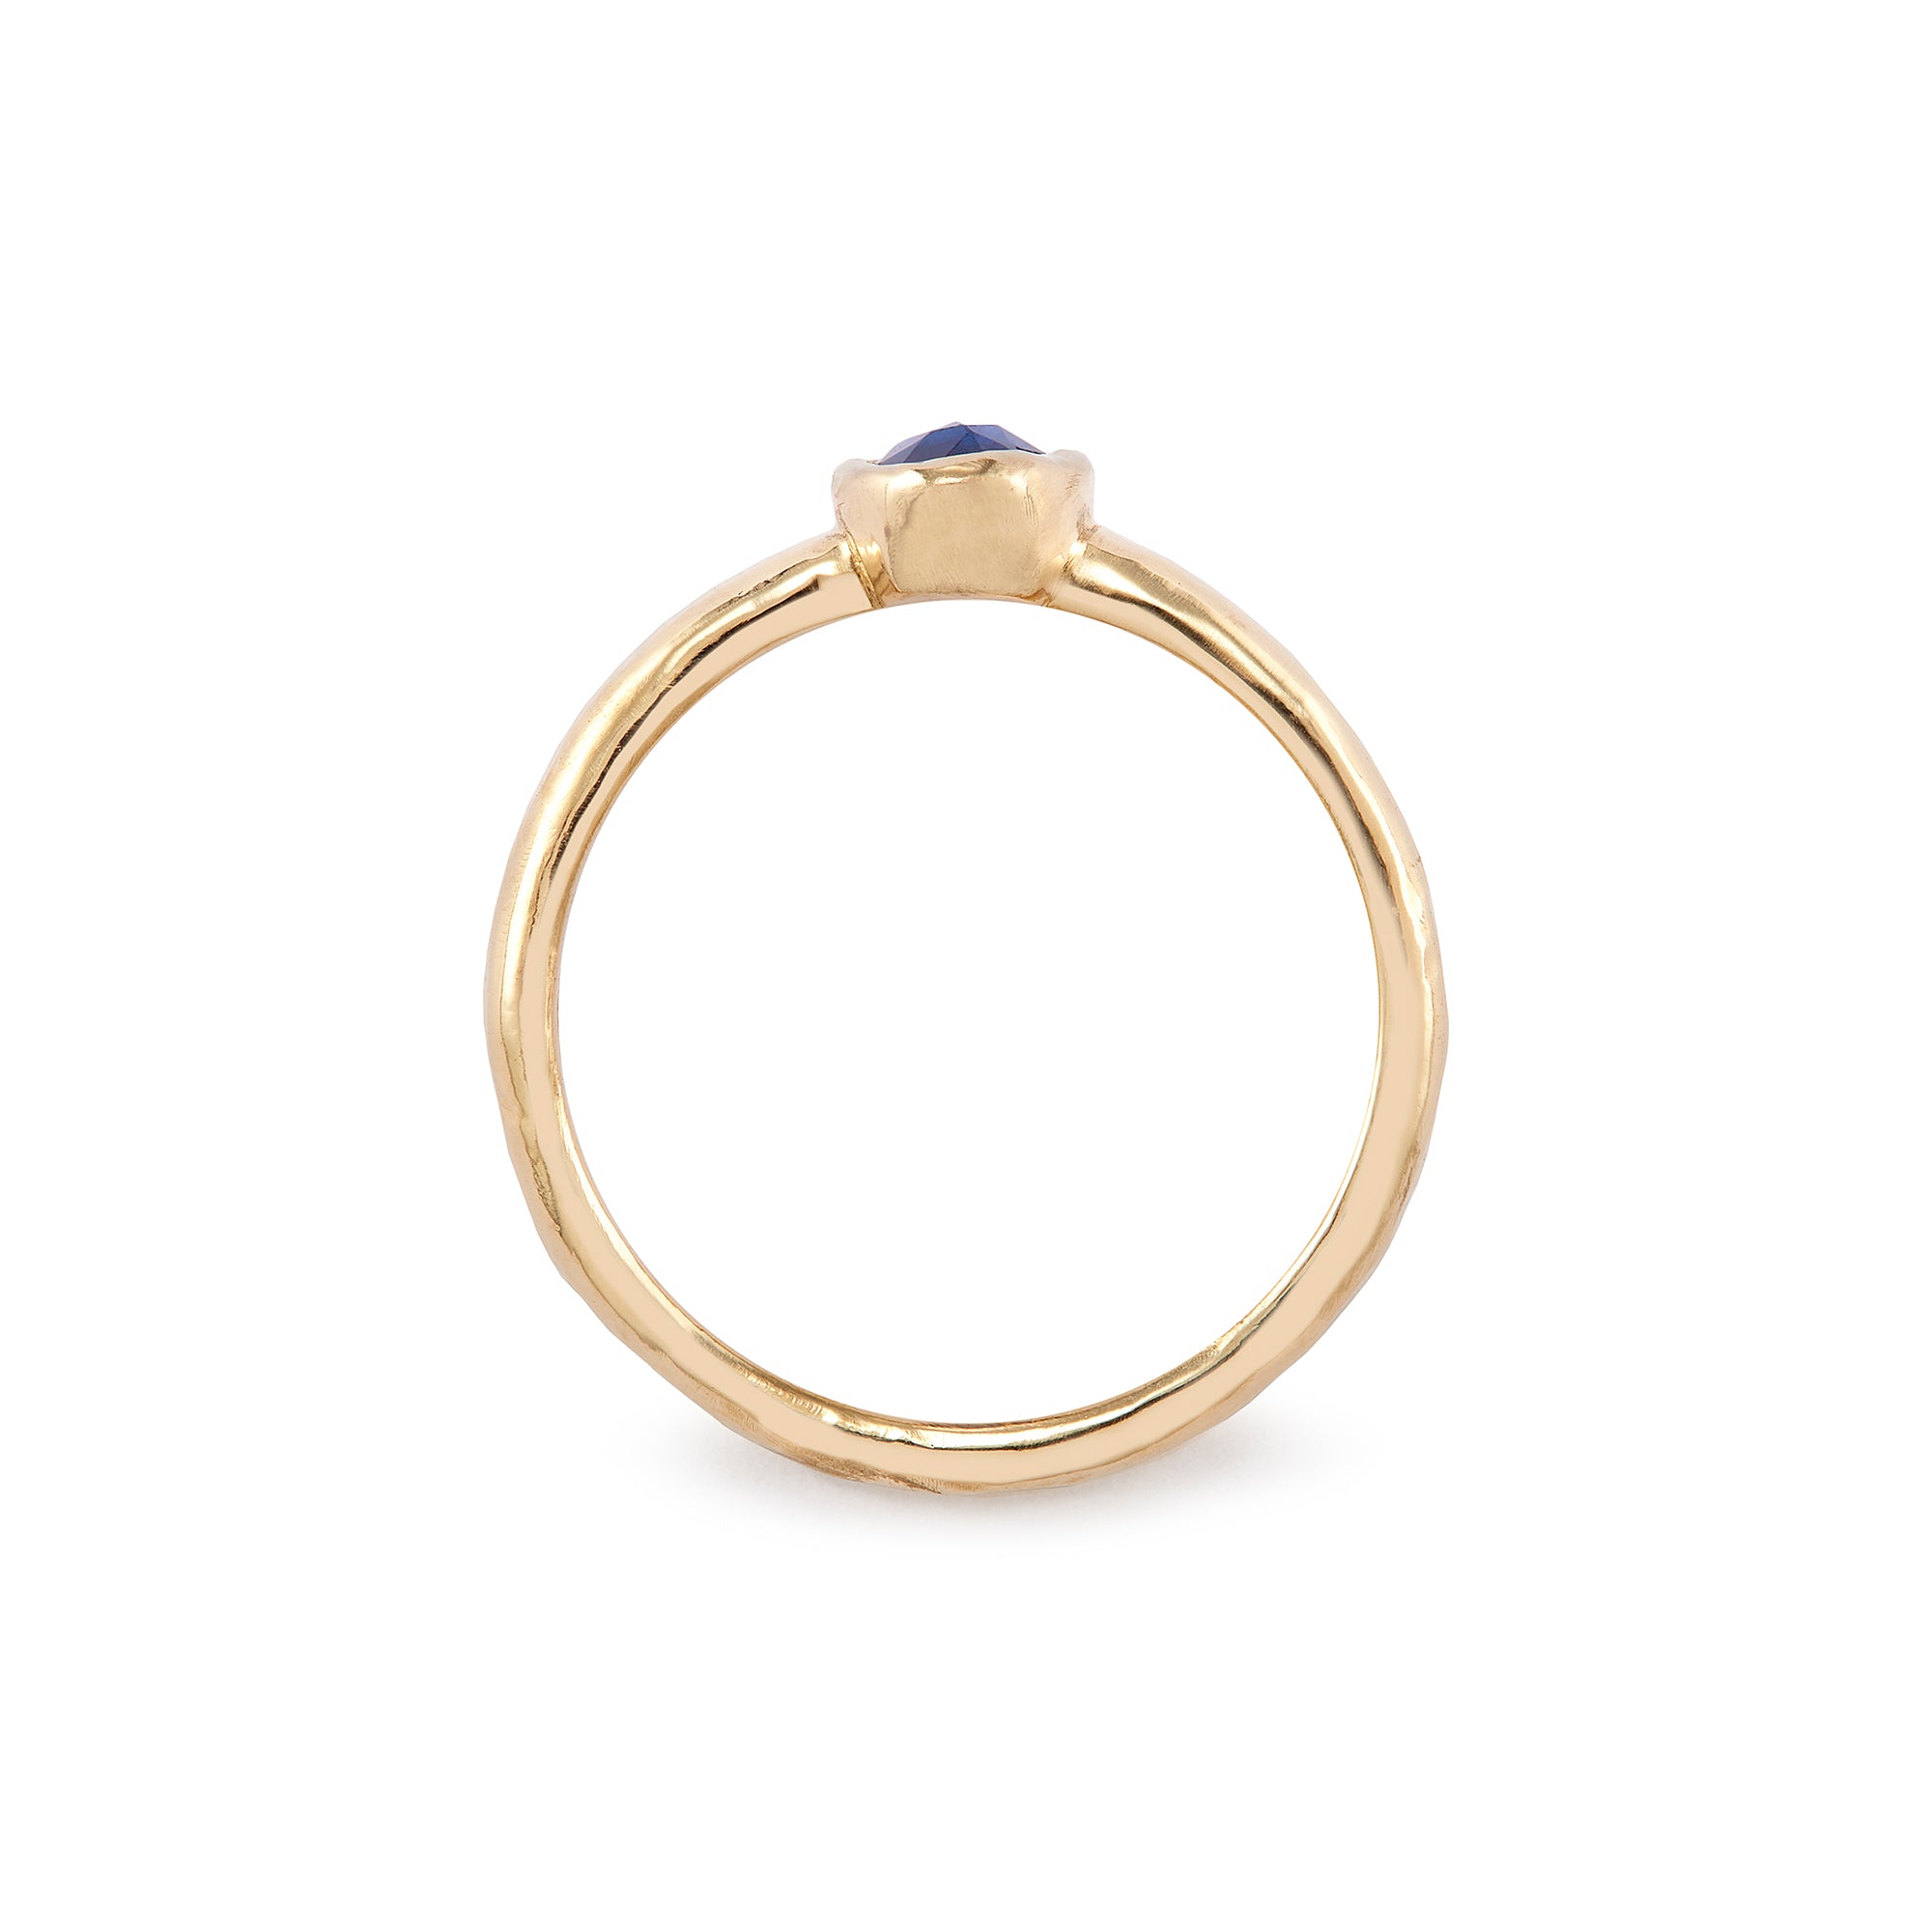 Pear Blue Sapphire Ring